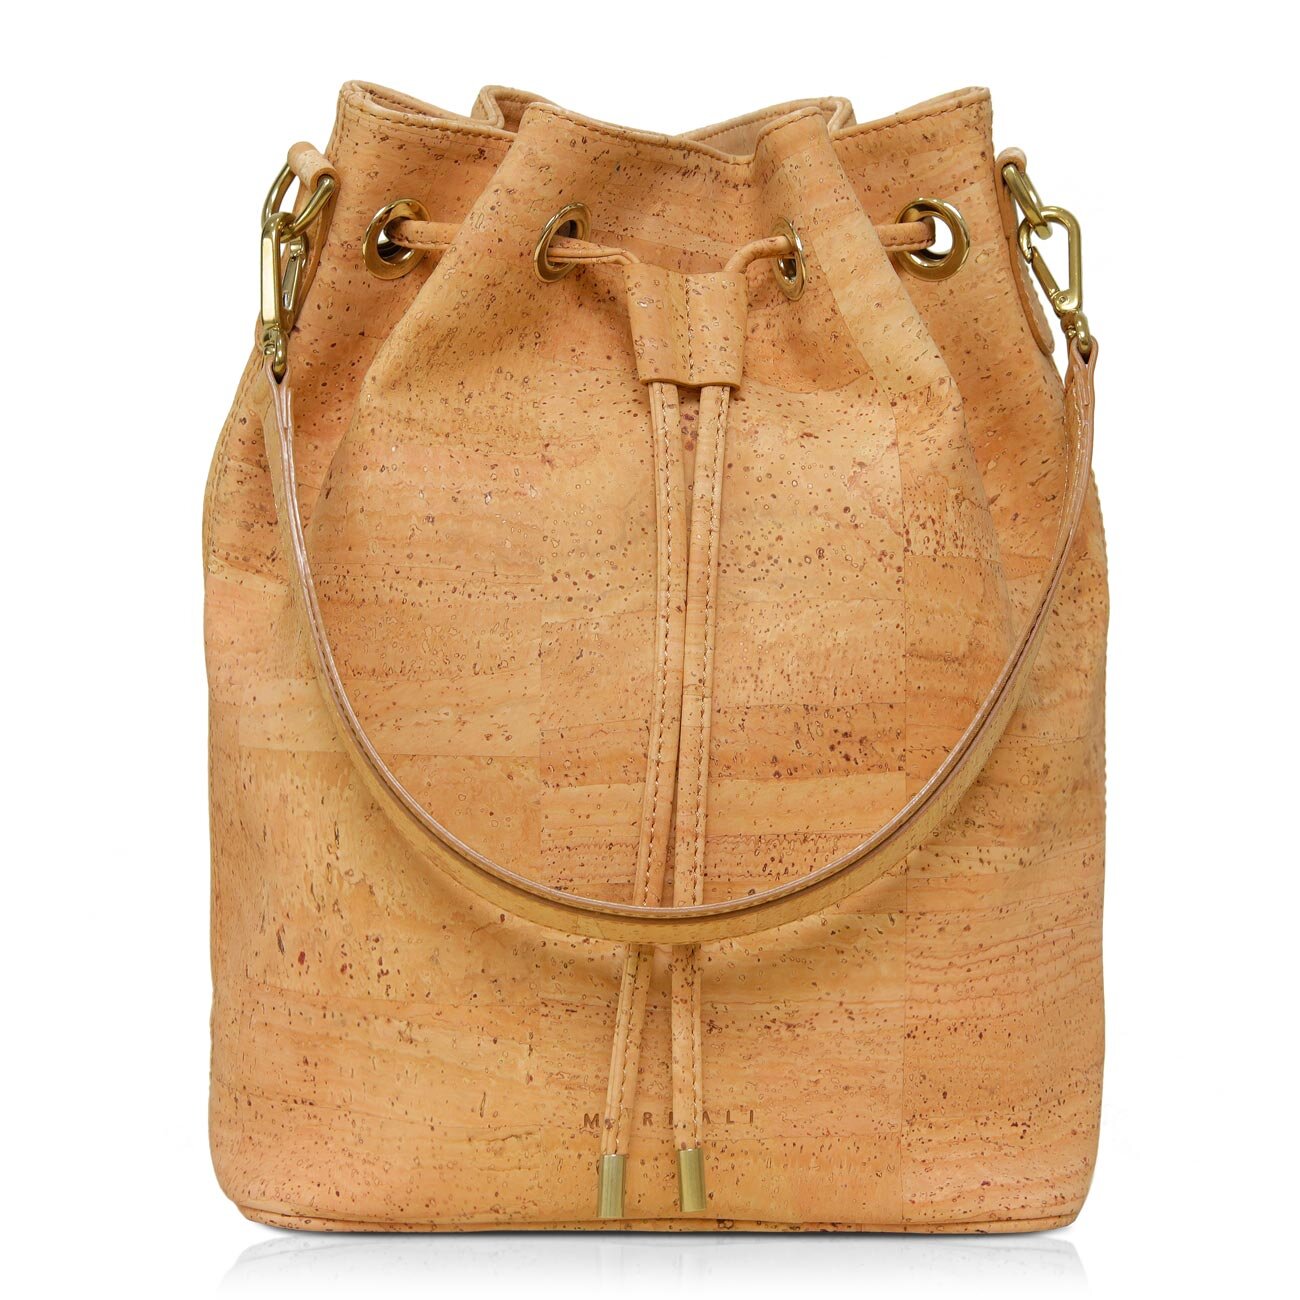 Montado Backpack Brown Natural Cork Vegan Eco Friendly Bag | eBay